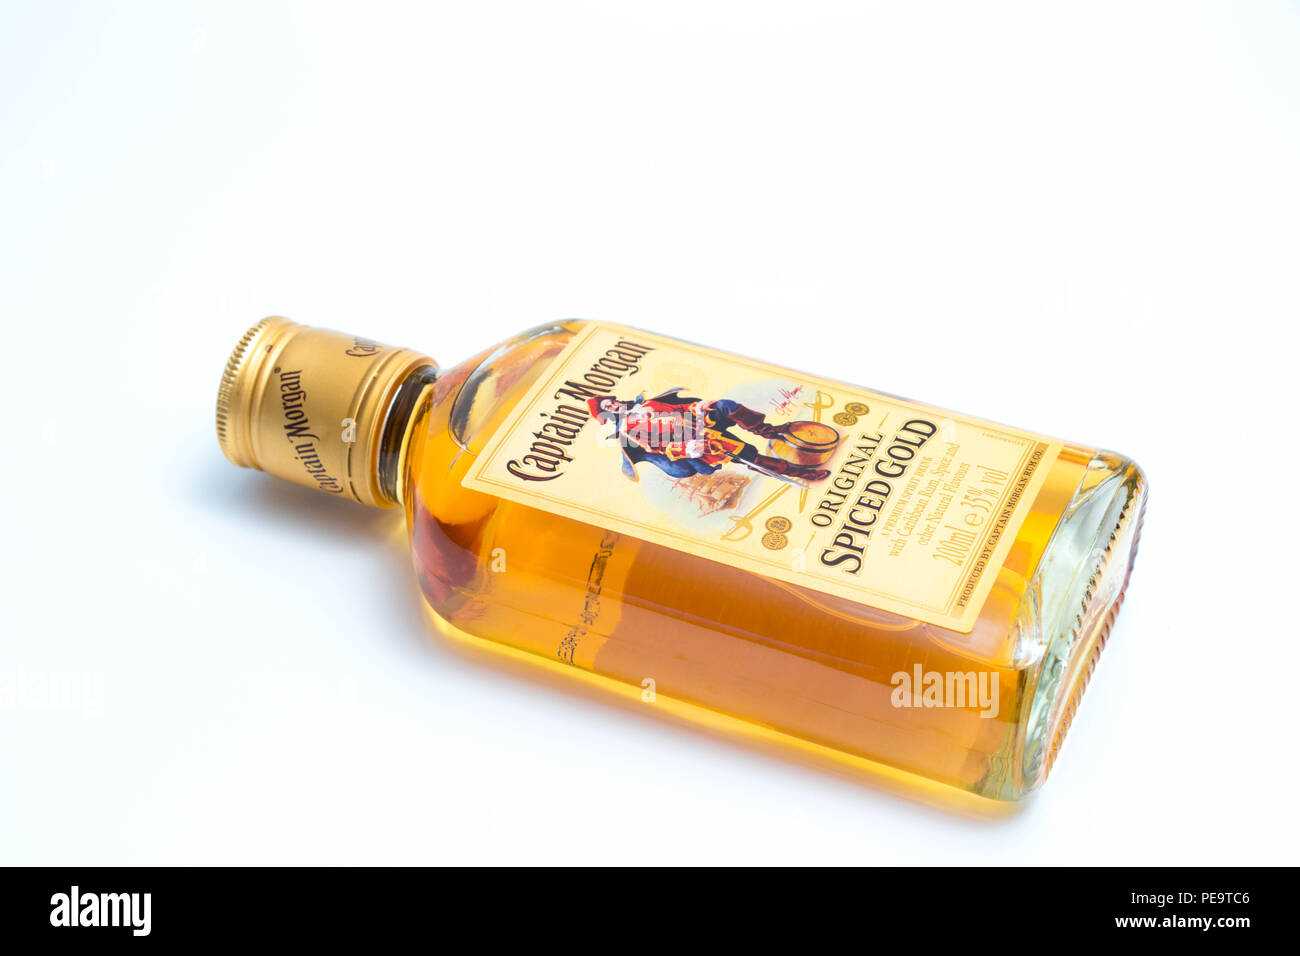 Flasque mini bouteille de rhum Captain Morgan spiced Photo Stock - Alamy